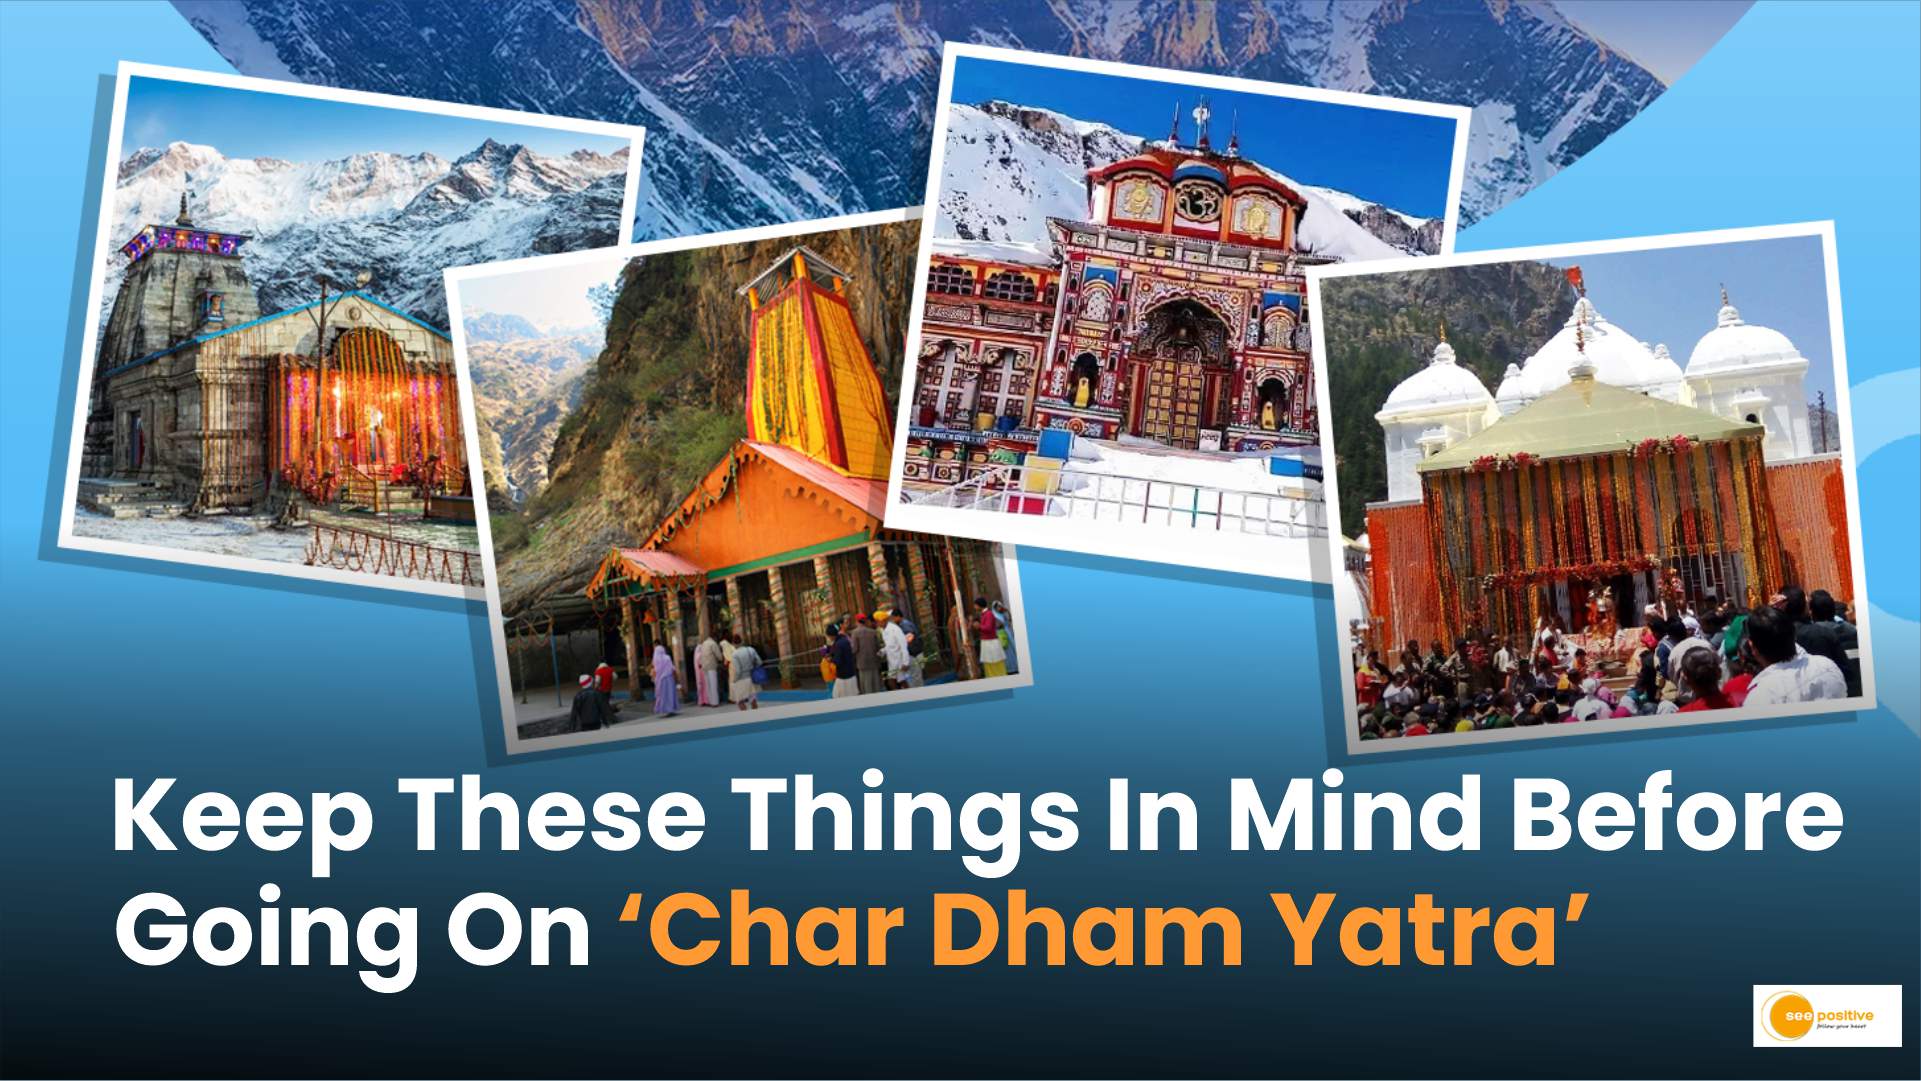 Char Dham Yatra